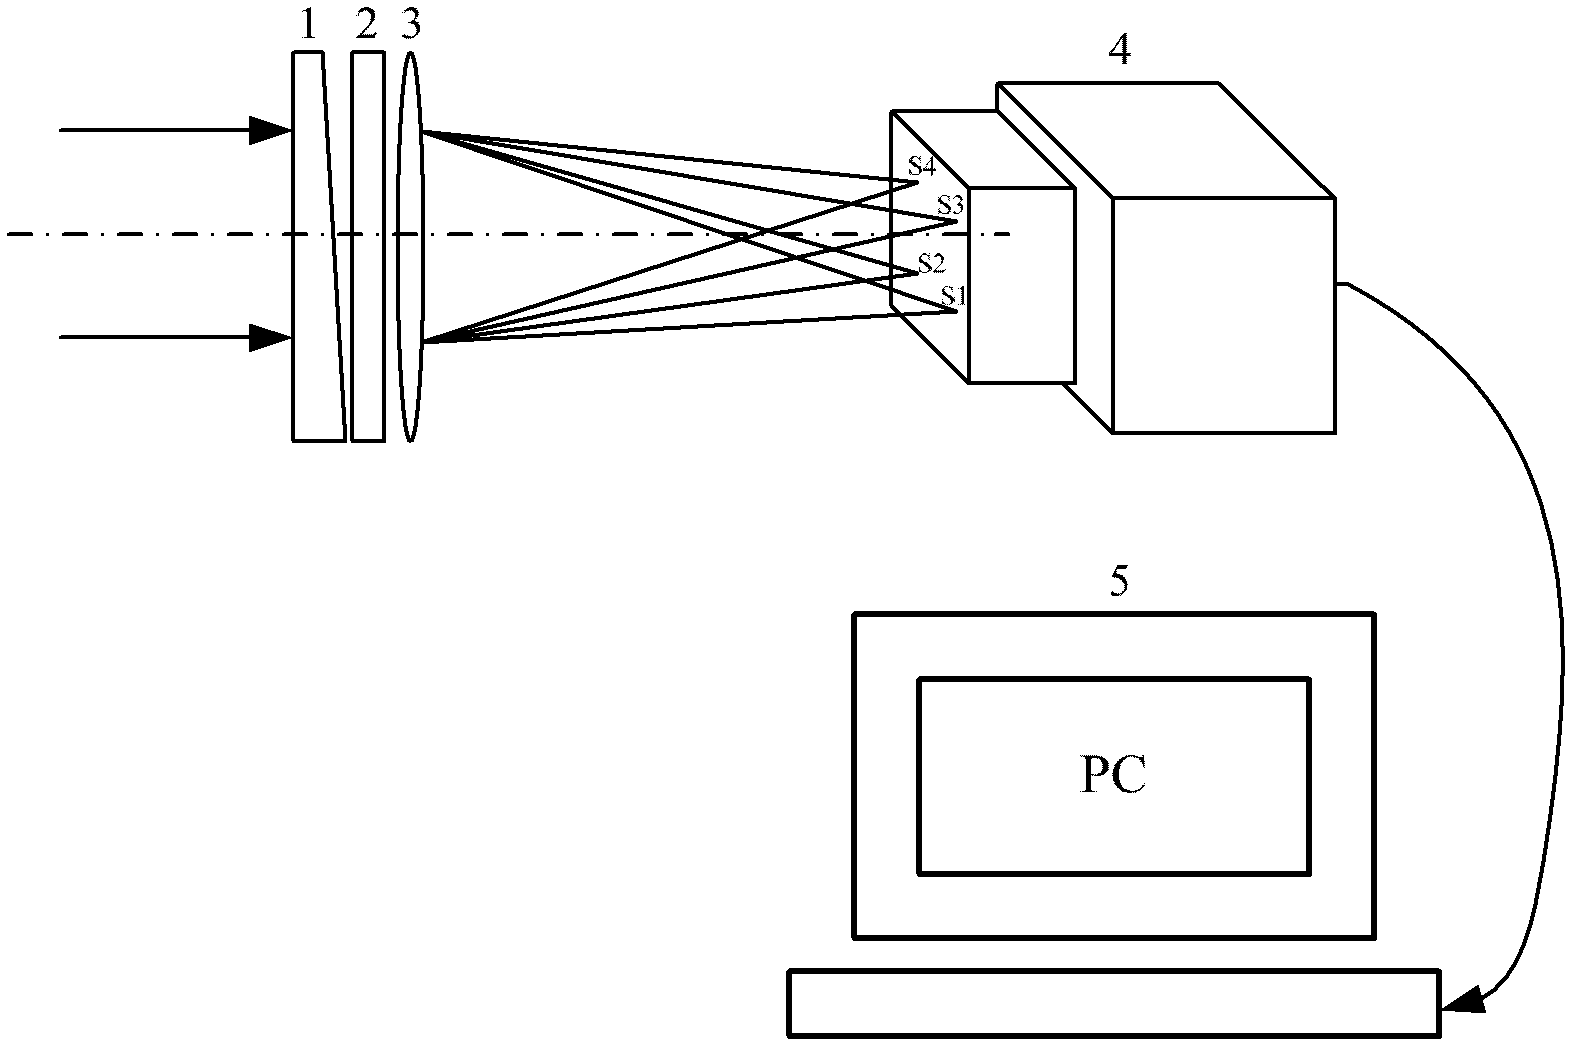 Laser far field focal spot measurement method based on orthogonal light wedge dichroism and focal spot reconstruction algorithm